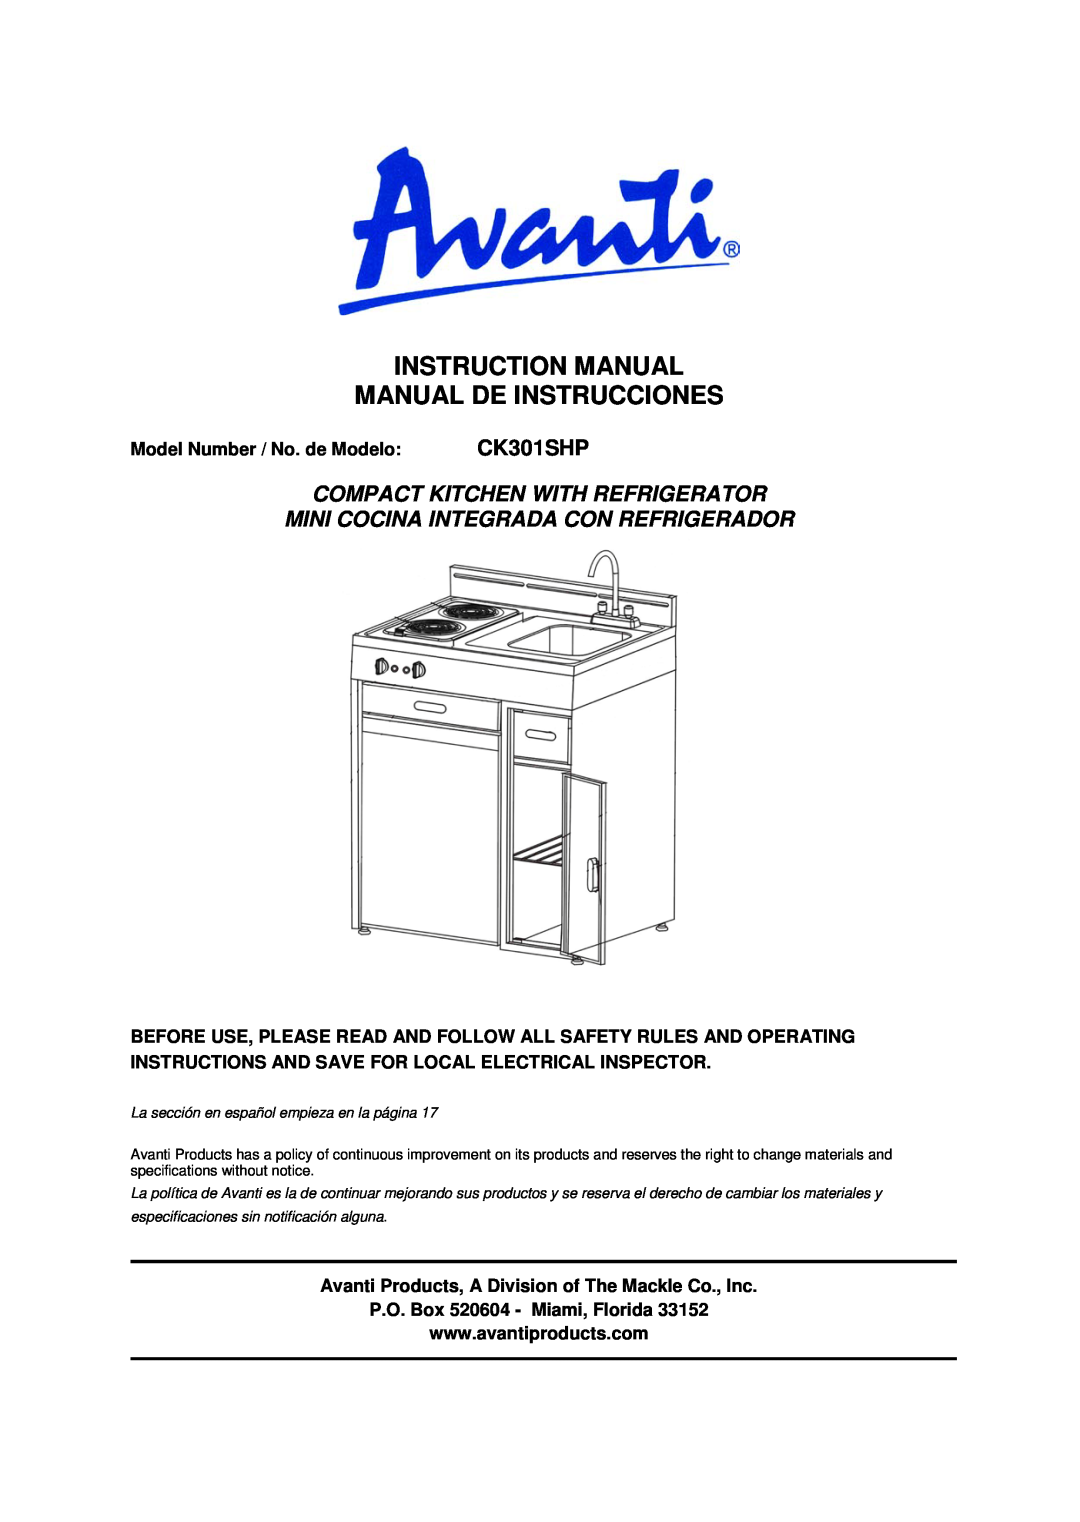 Avanti CK301SHP instruction manual Instruction Manual Manual De Instrucciones, Compact Kitchen With Refrigerator 